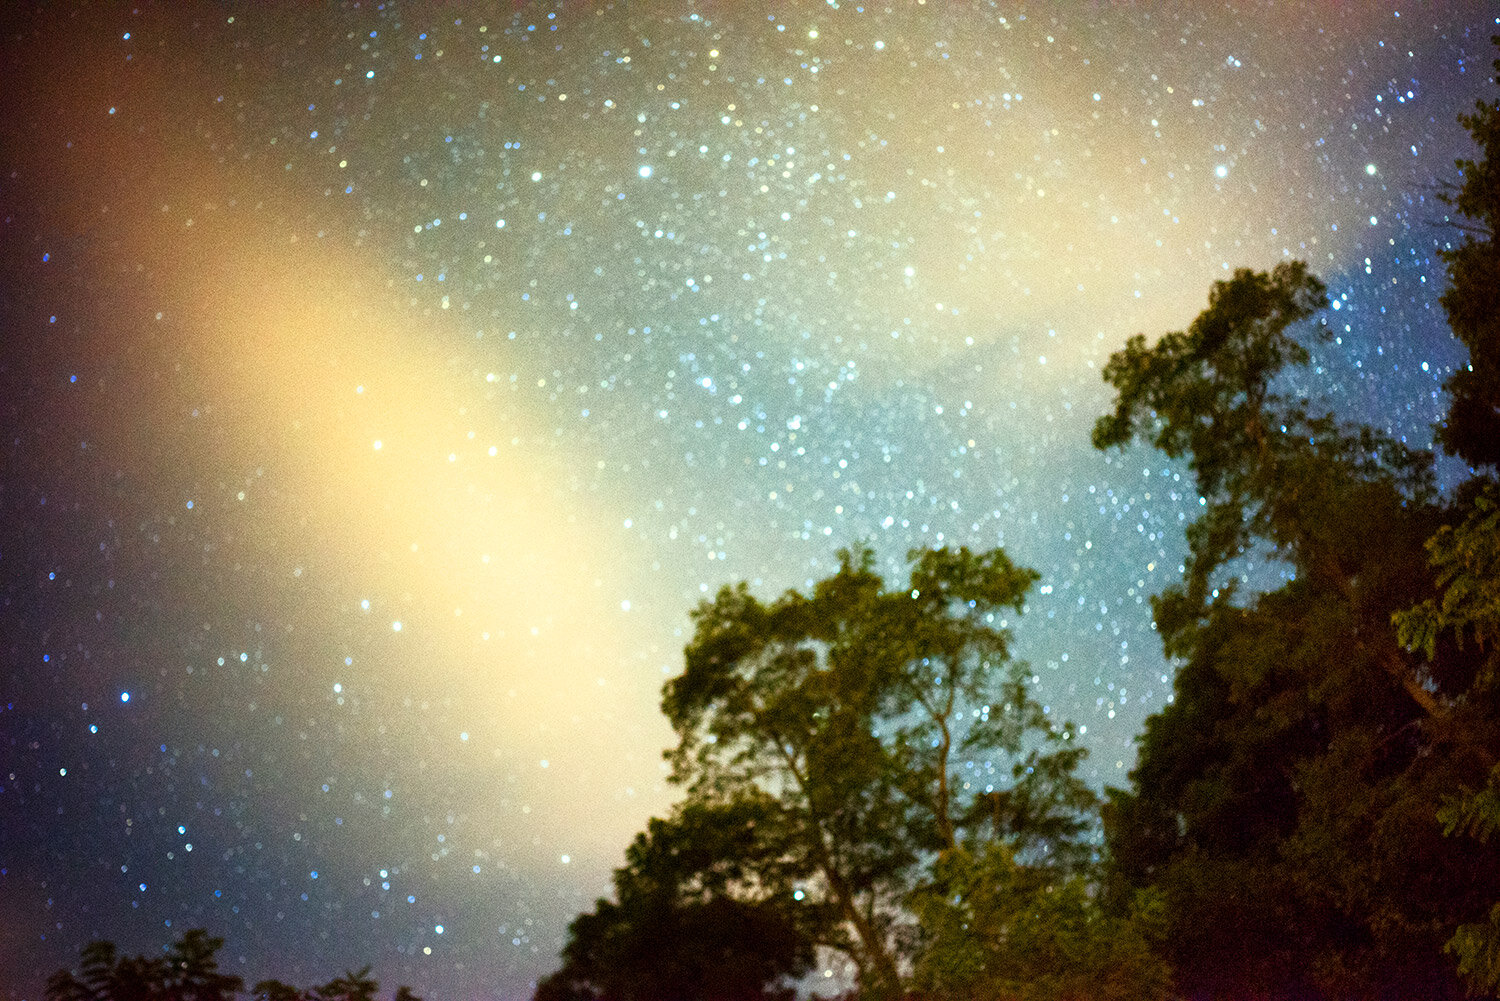   Untitled (night sky). Julian, PA   Archival fiber inkjet print  12 x 18 inches 